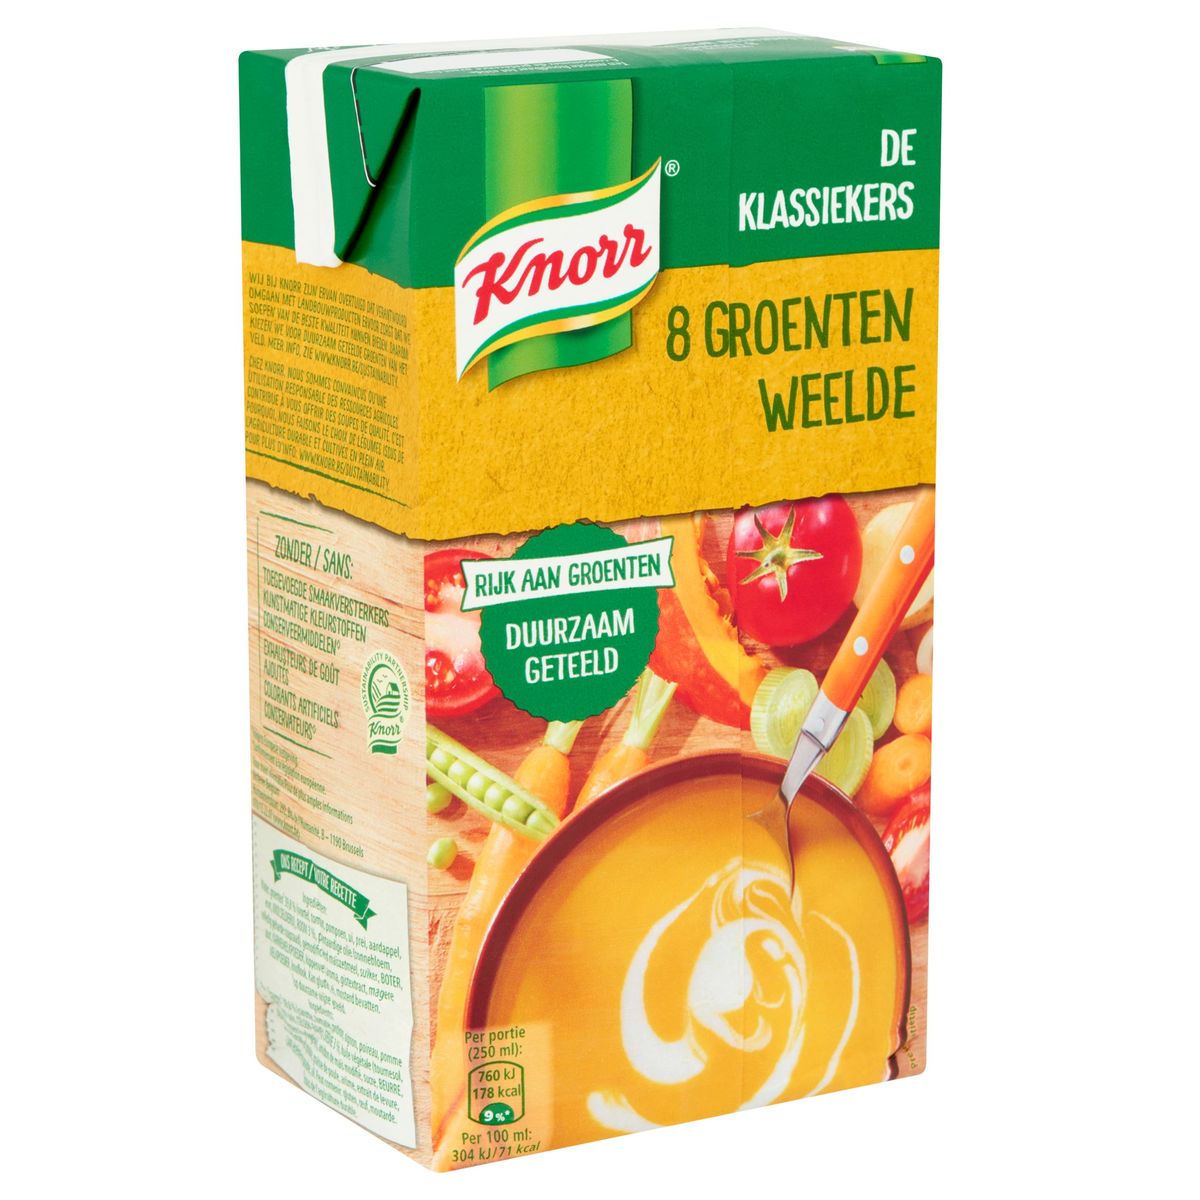 Knorr Classics Tetra Soep 8 Groentenweelde 1 L